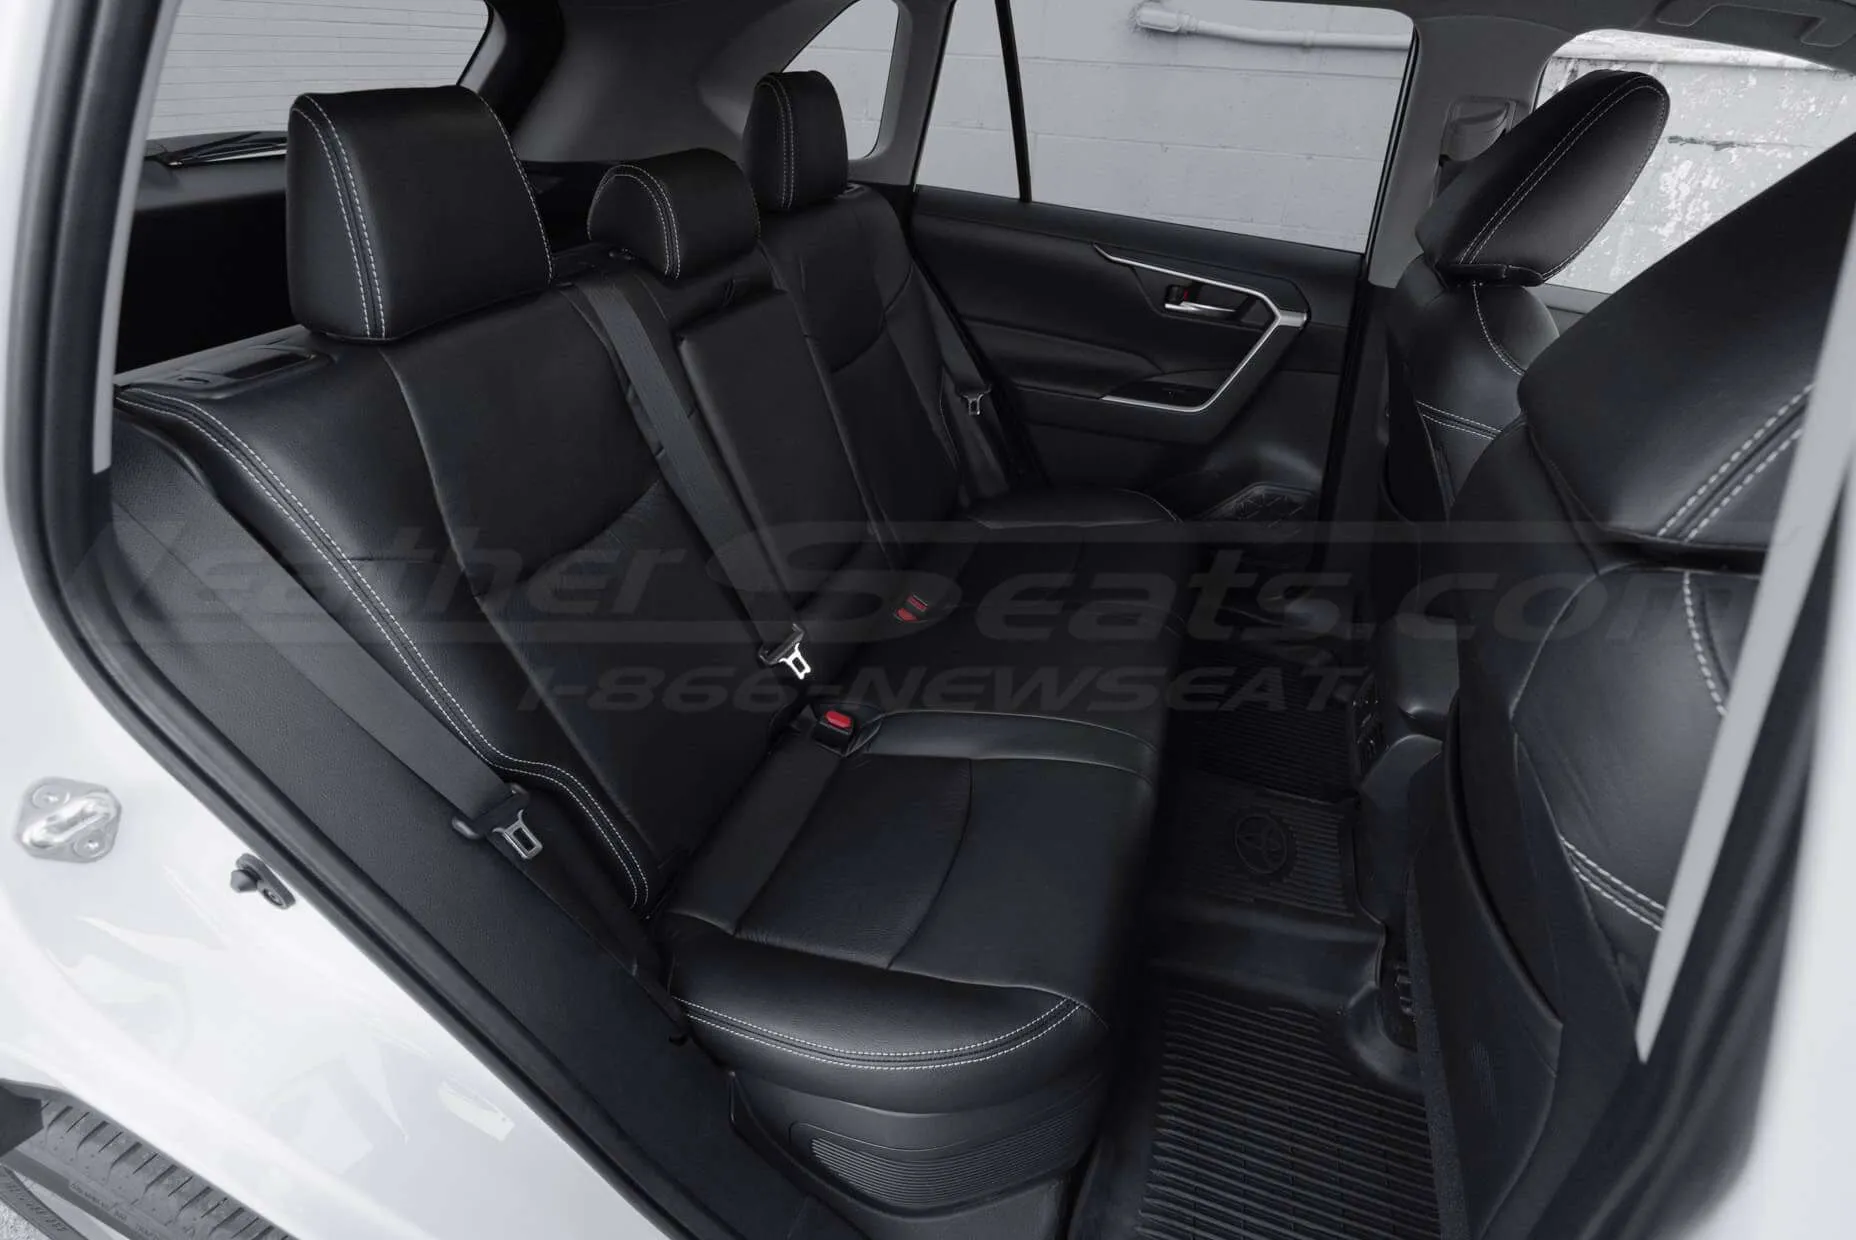 Installed RAV4 leather rear seats - passenger side